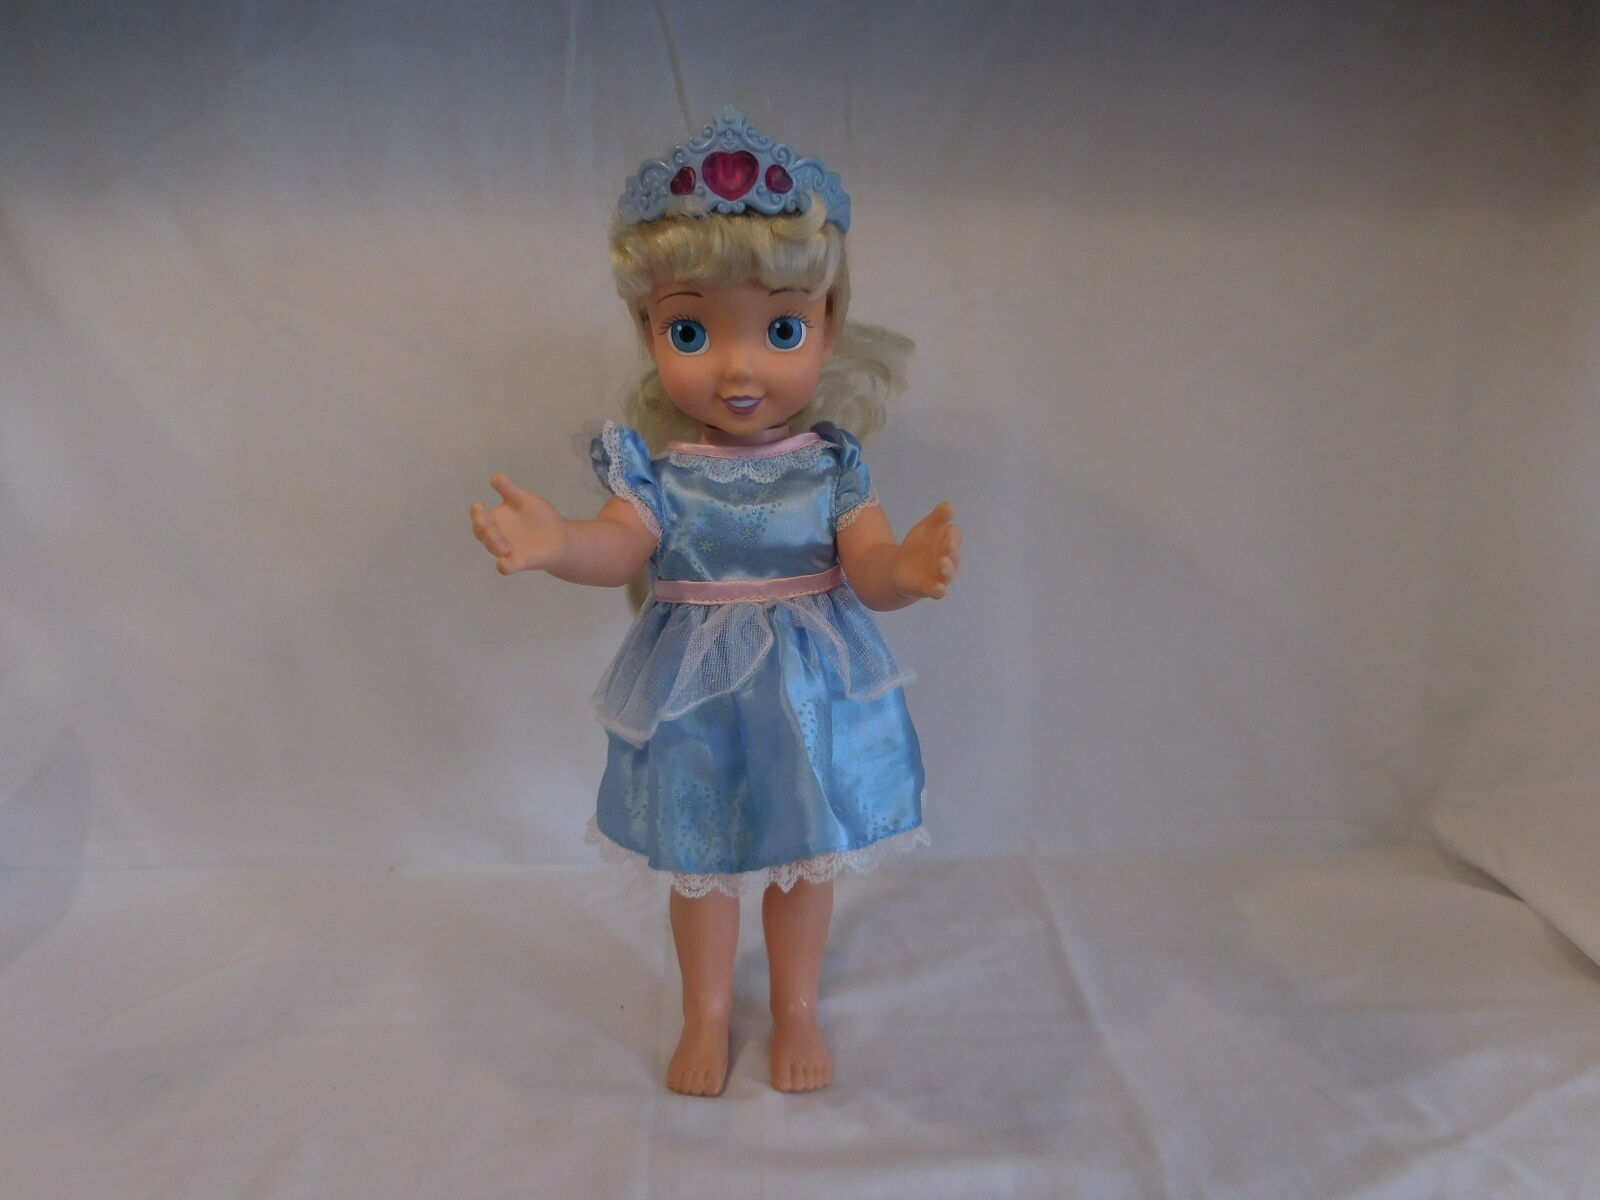 Disney 2006 Cinderella Toddler Talking and Lights up Doll Dressed and works - $20.81